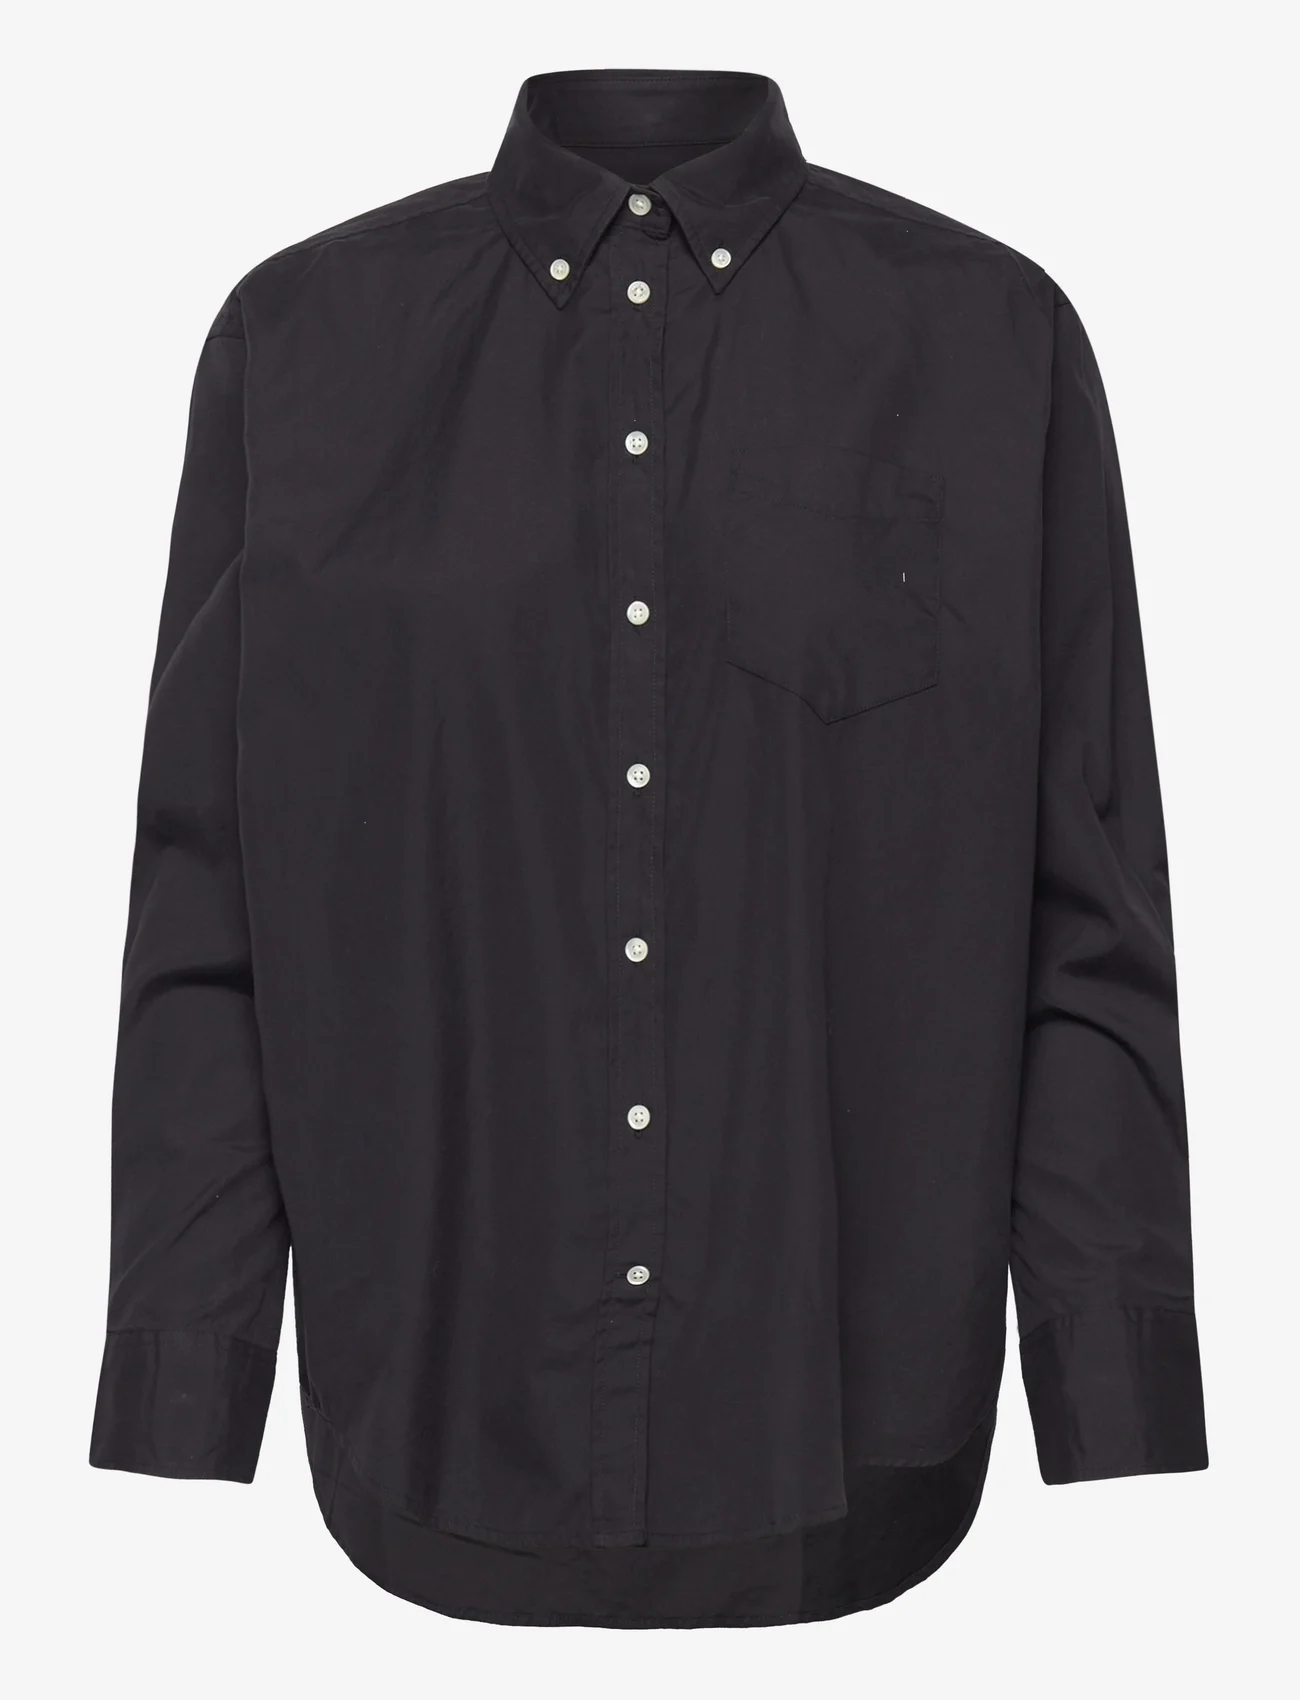 GANT - RELAXED BD LUXURY POPLIN - long-sleeved shirts - ebony black - 0